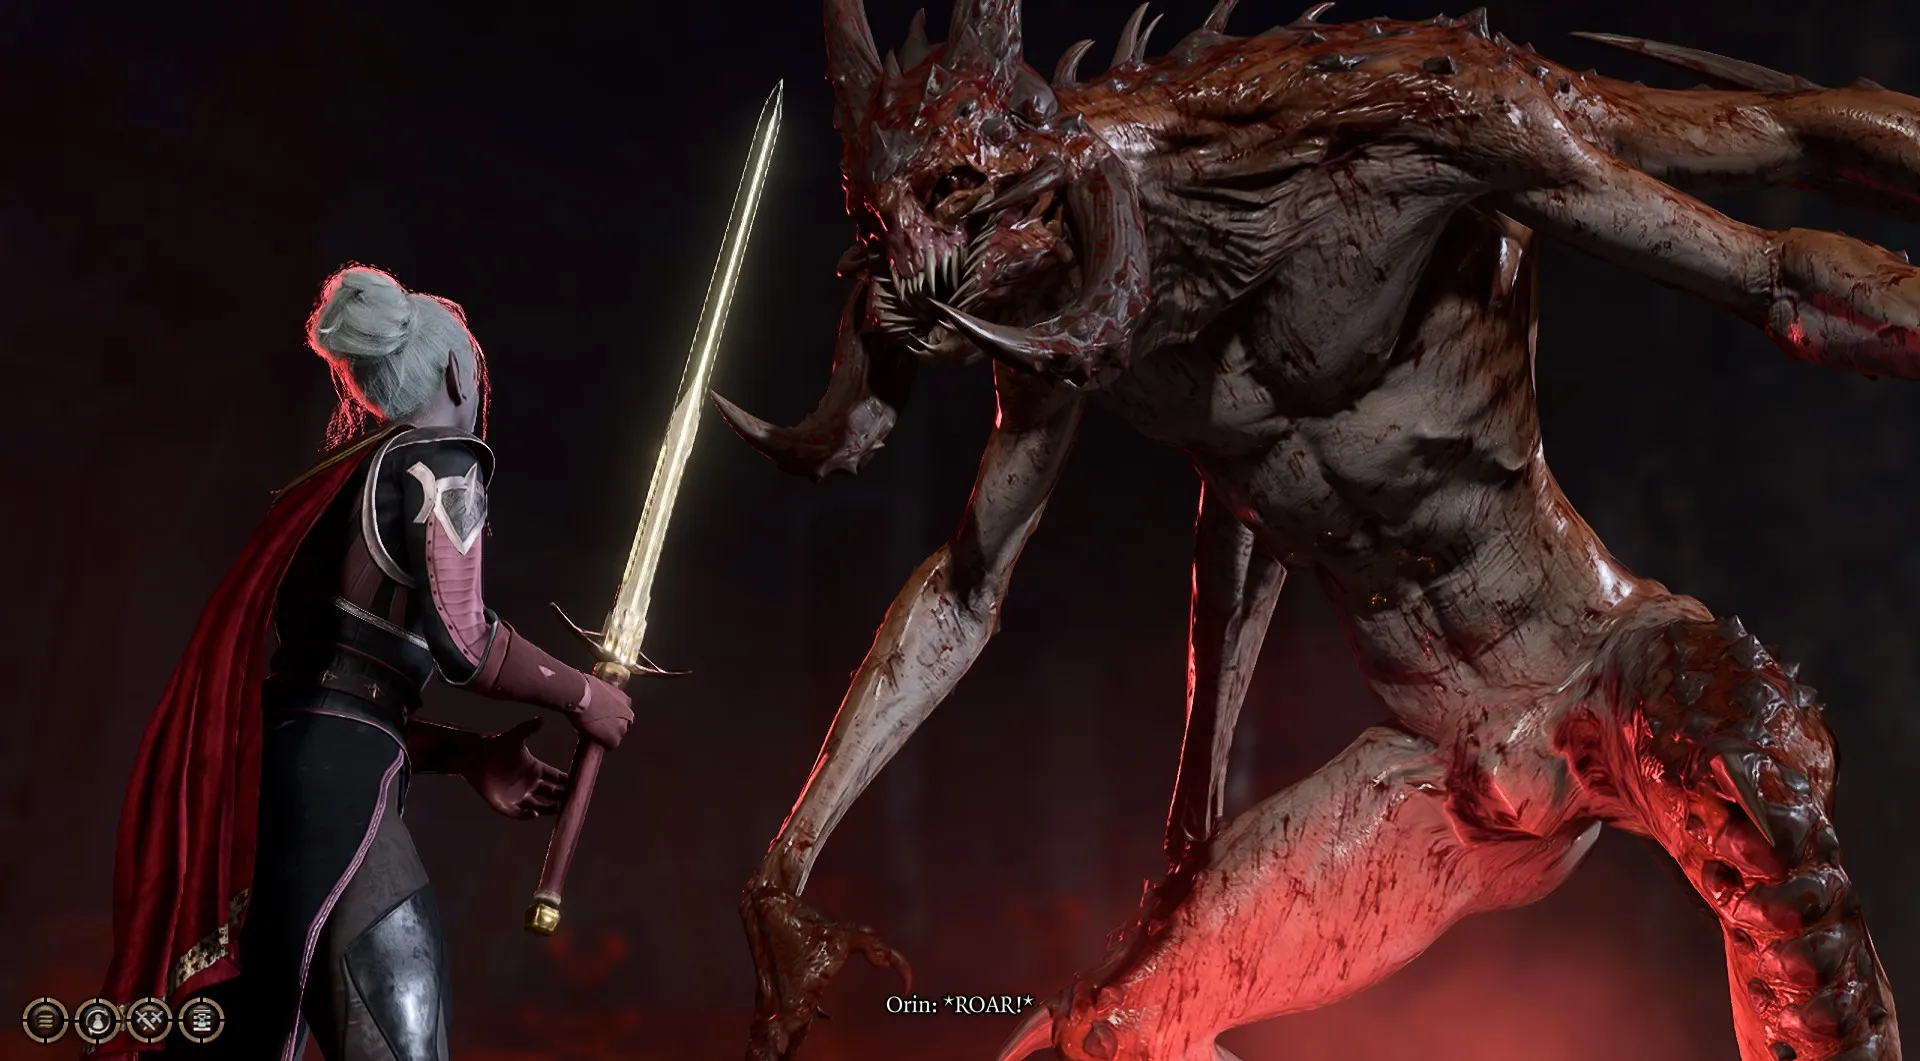 Redeemed Dark Urge Drow Sorcerer affronta Slayer Orin in un duello a morte in Baldur's Gate 3